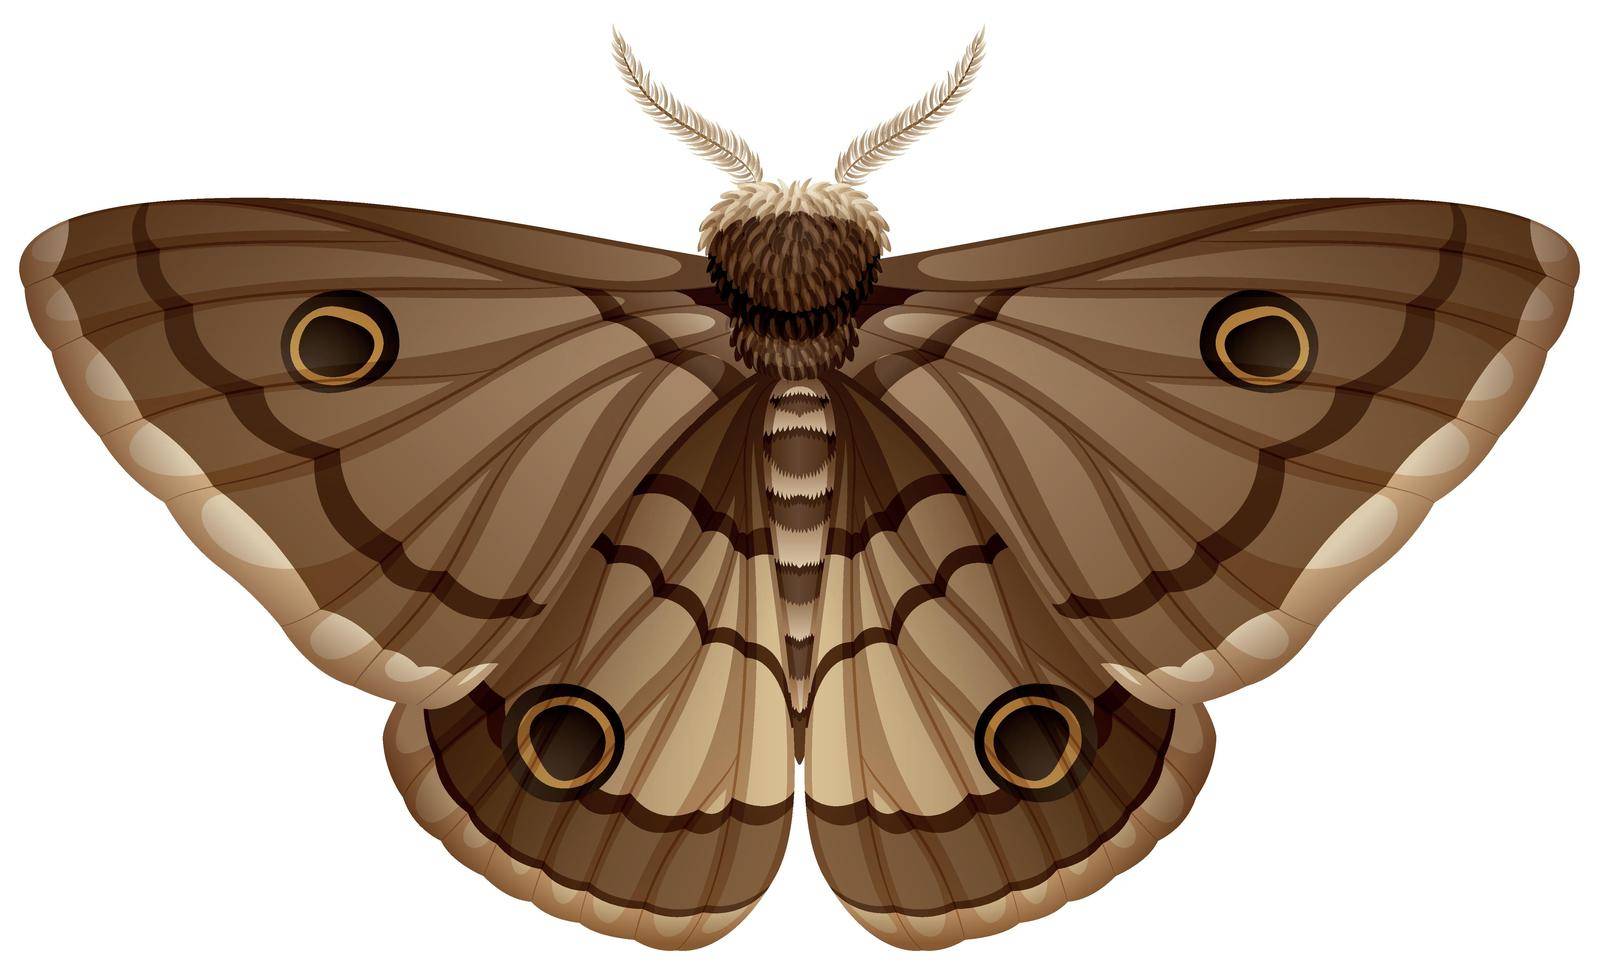 Moth closeup white background illustration